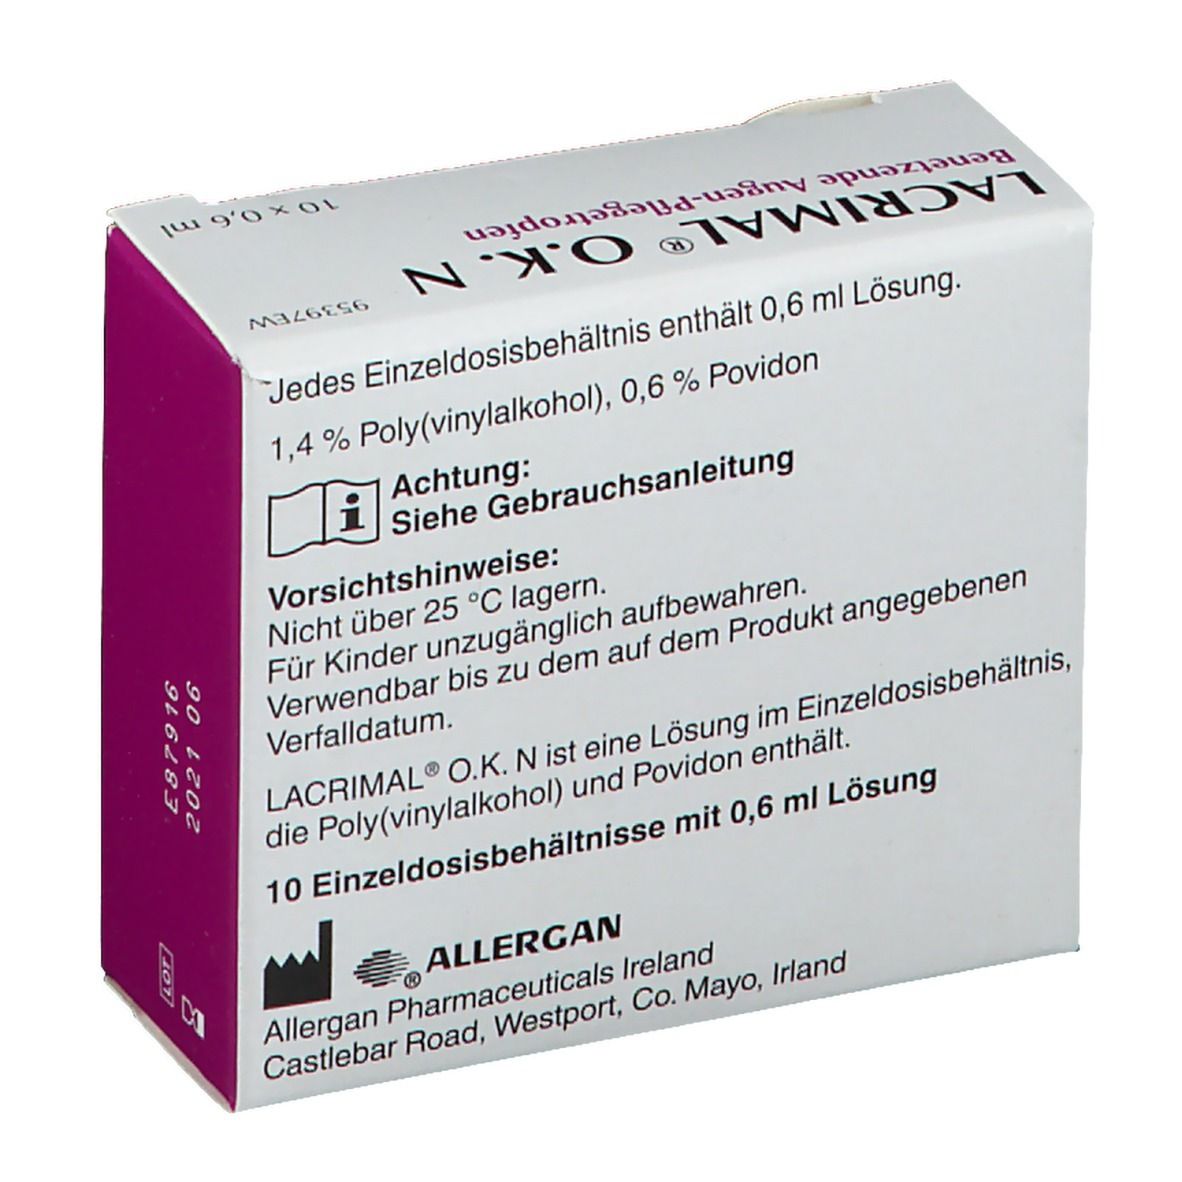 Lacrimal® O.K. 14 mg / ml + 6 mg / ml